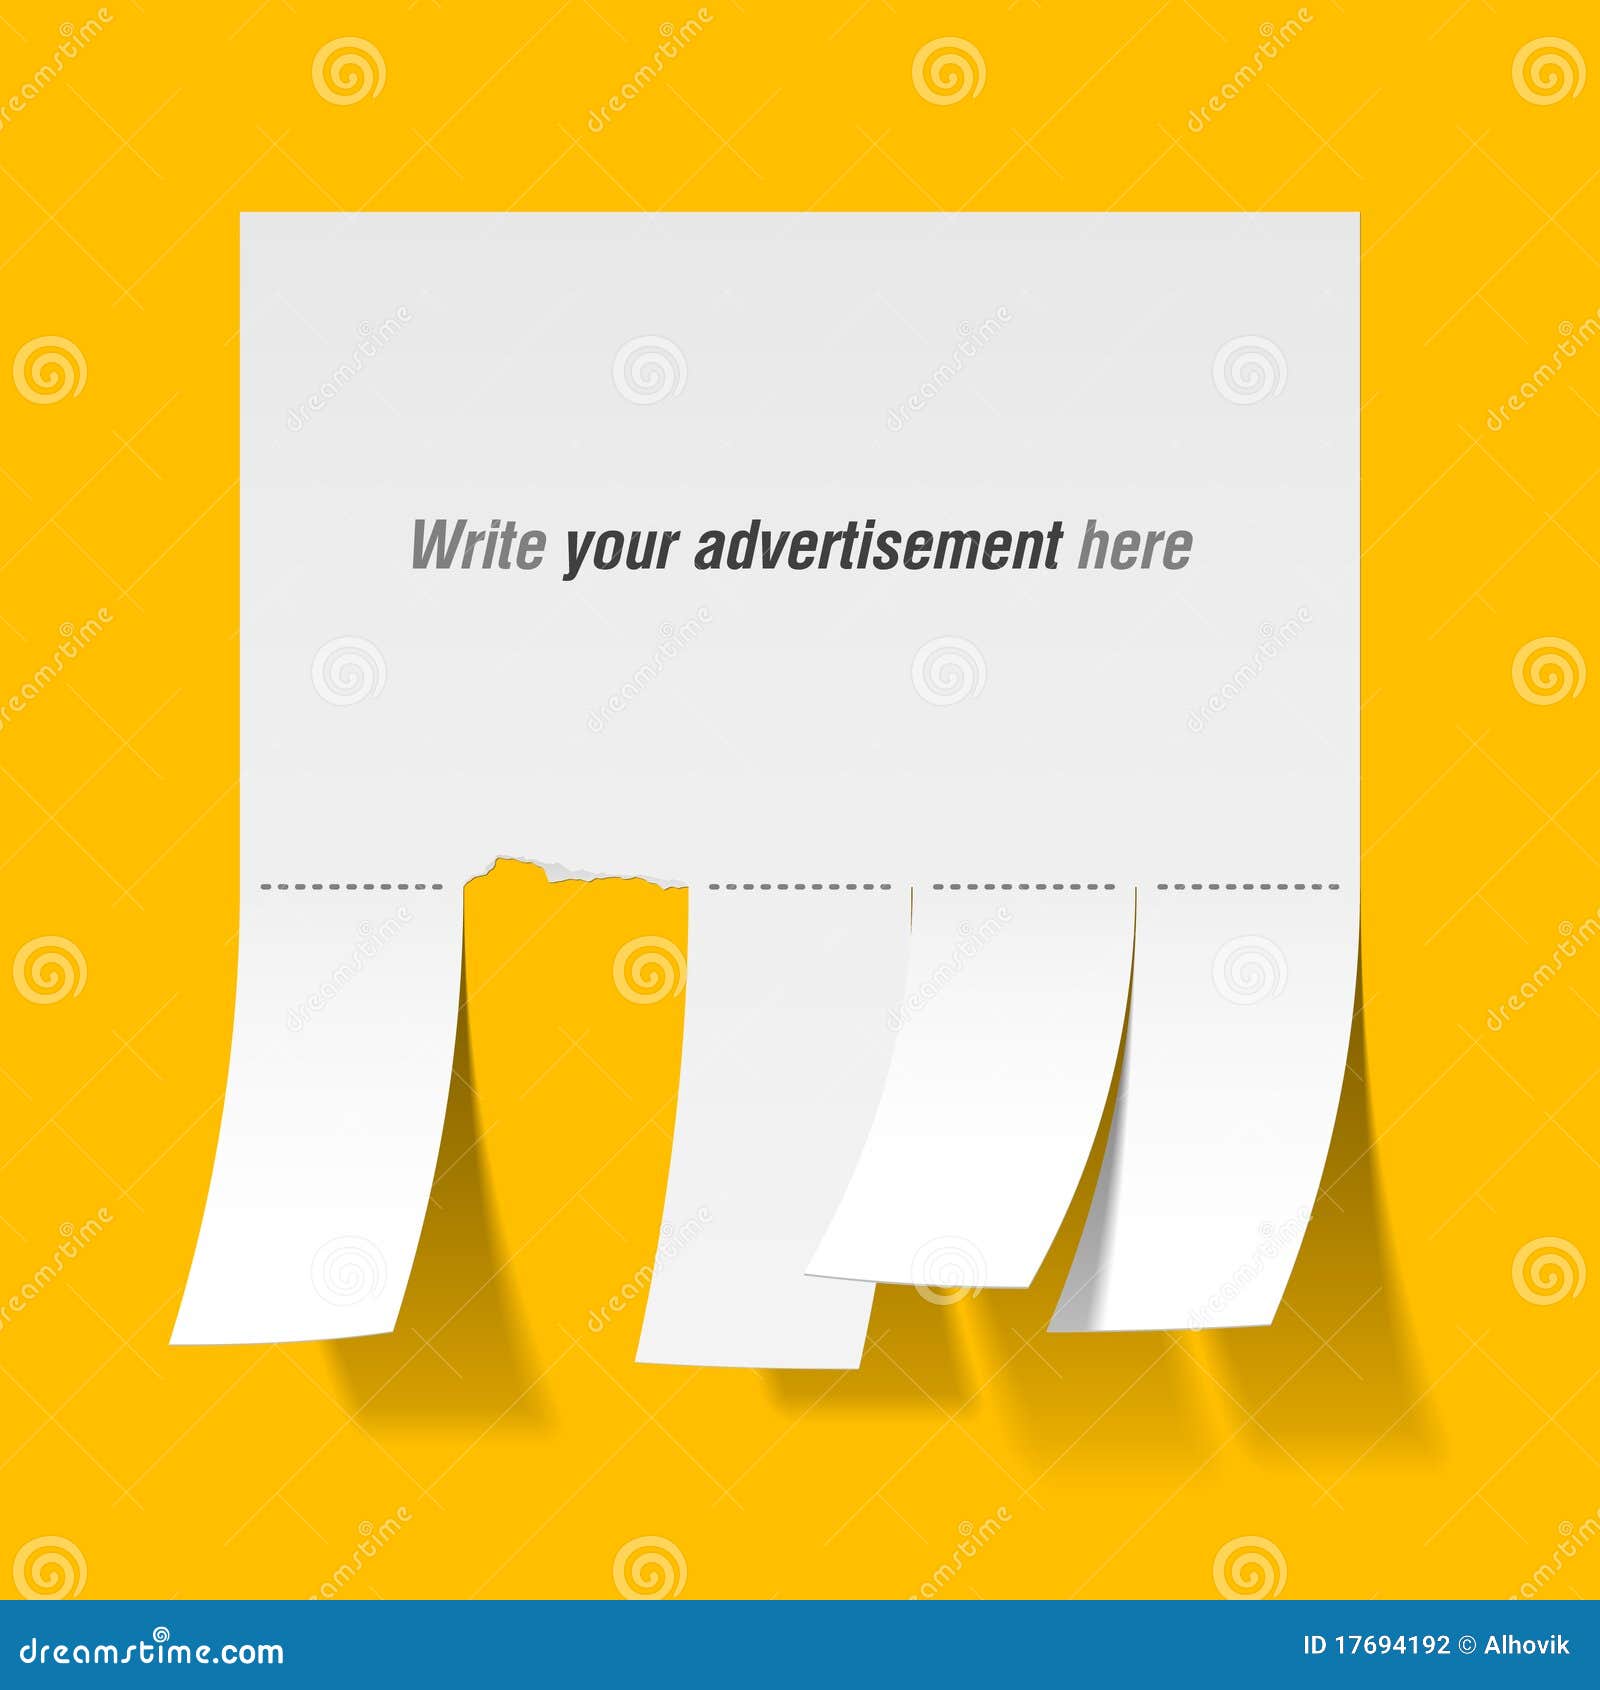 blank advertisement